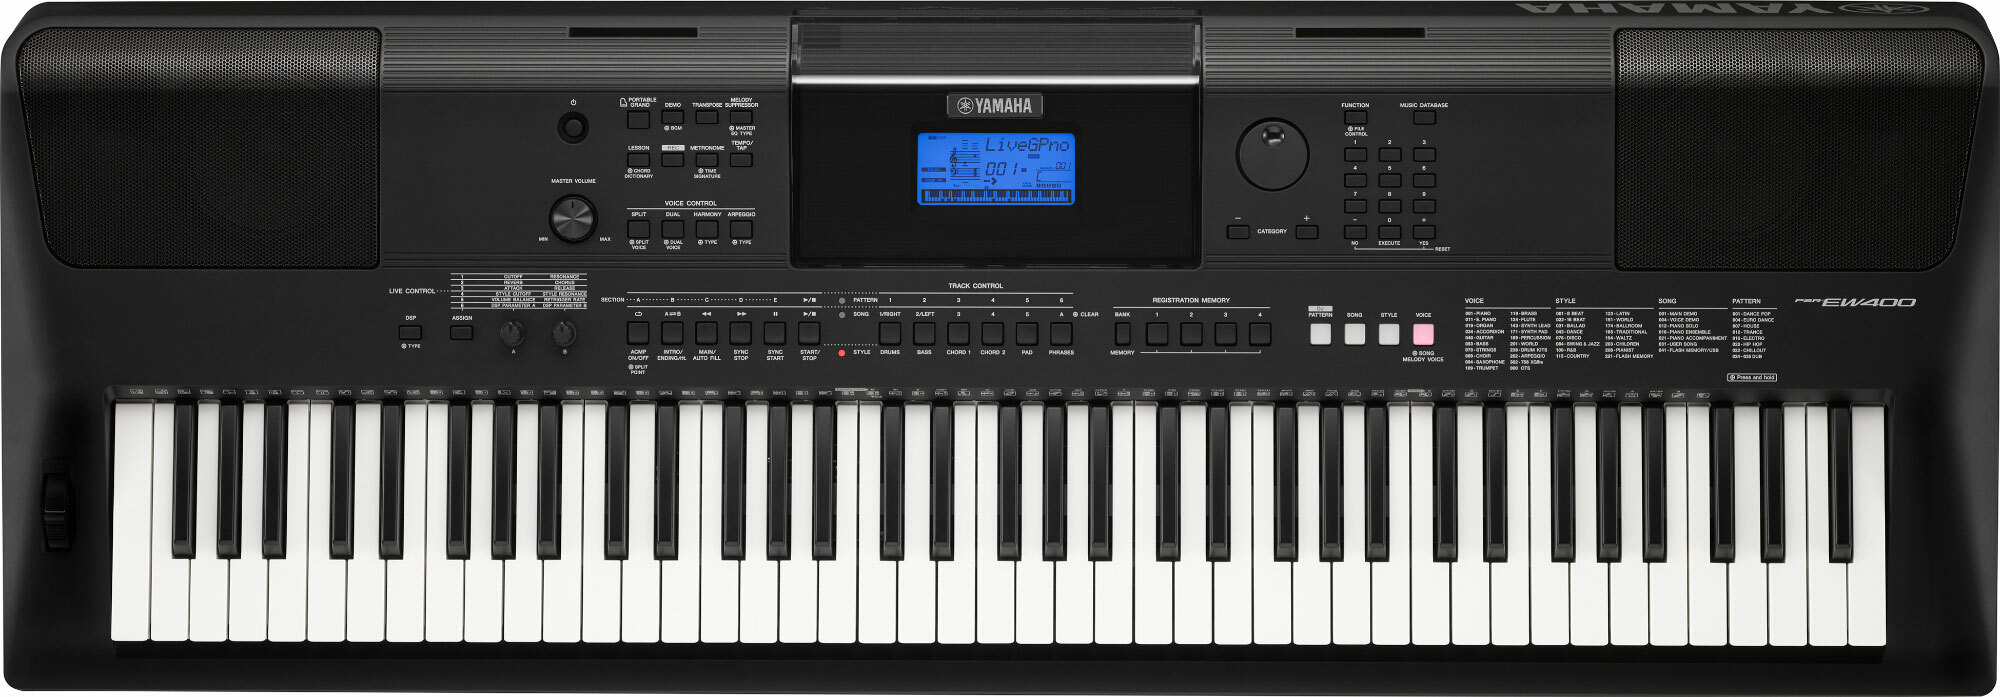 Yamaha Psr-ew400 - Entertainer Keyboard - Main picture